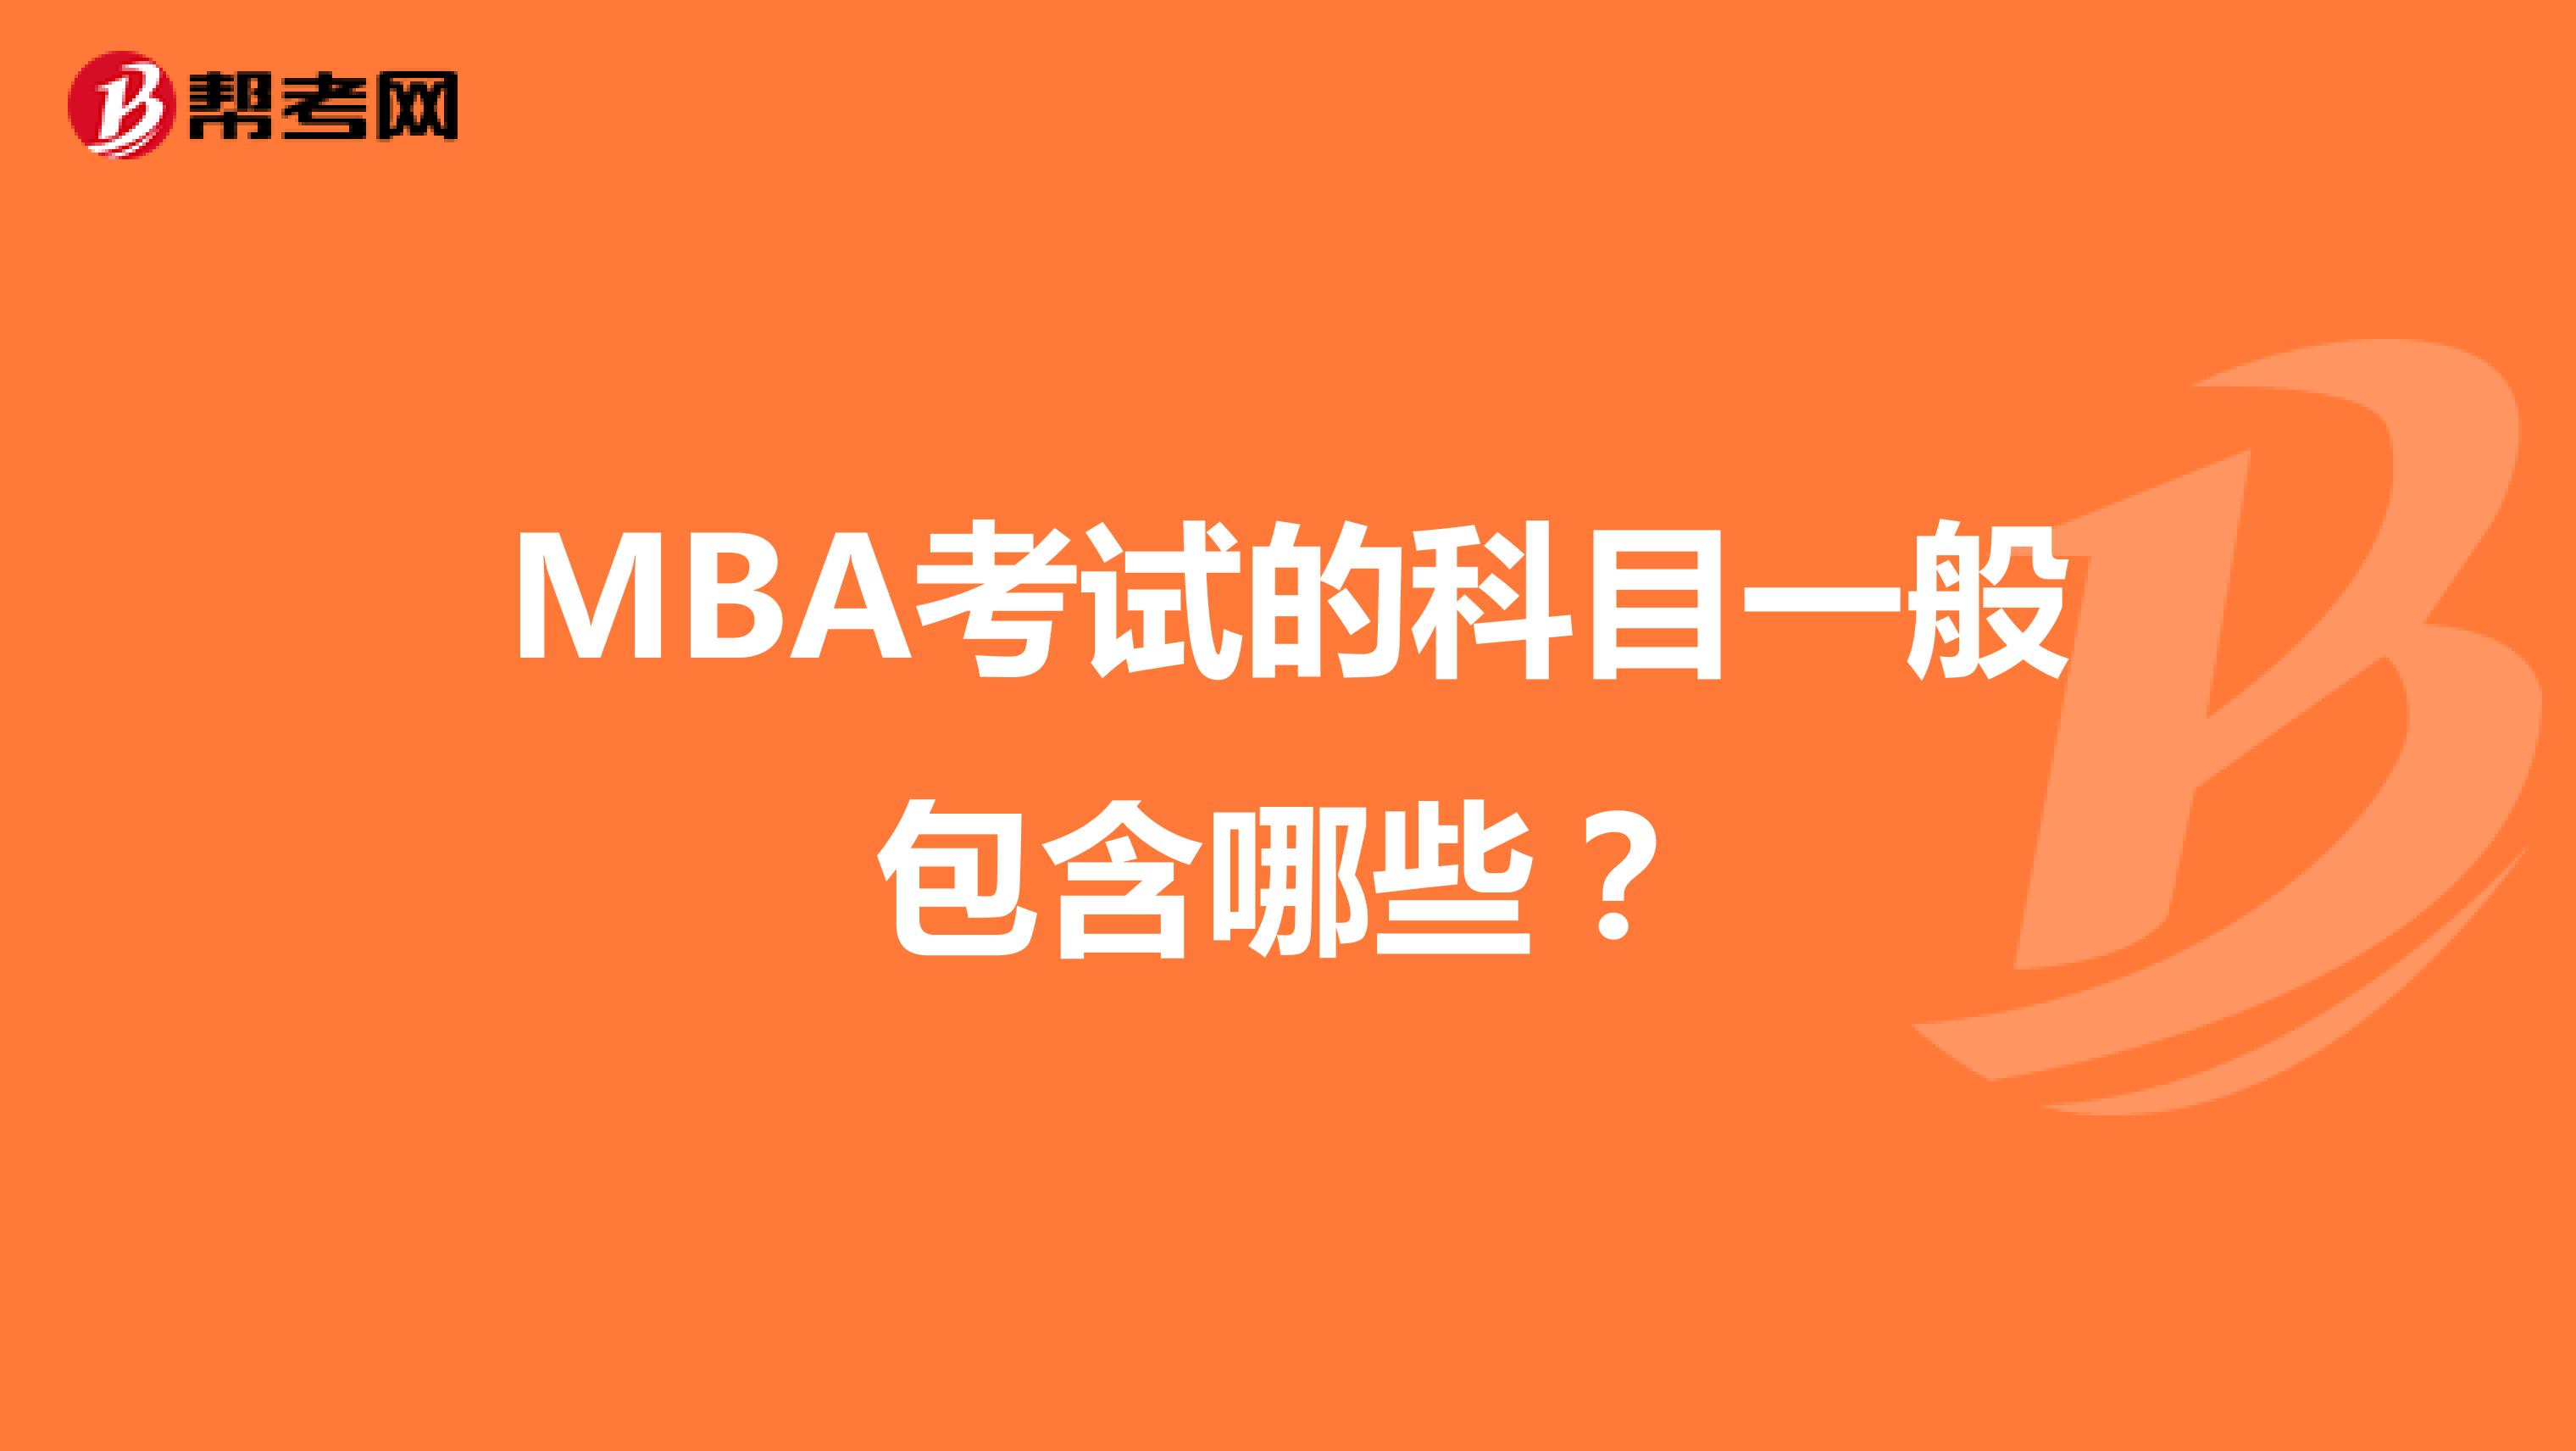 MBA考试的科目一般包含哪些？